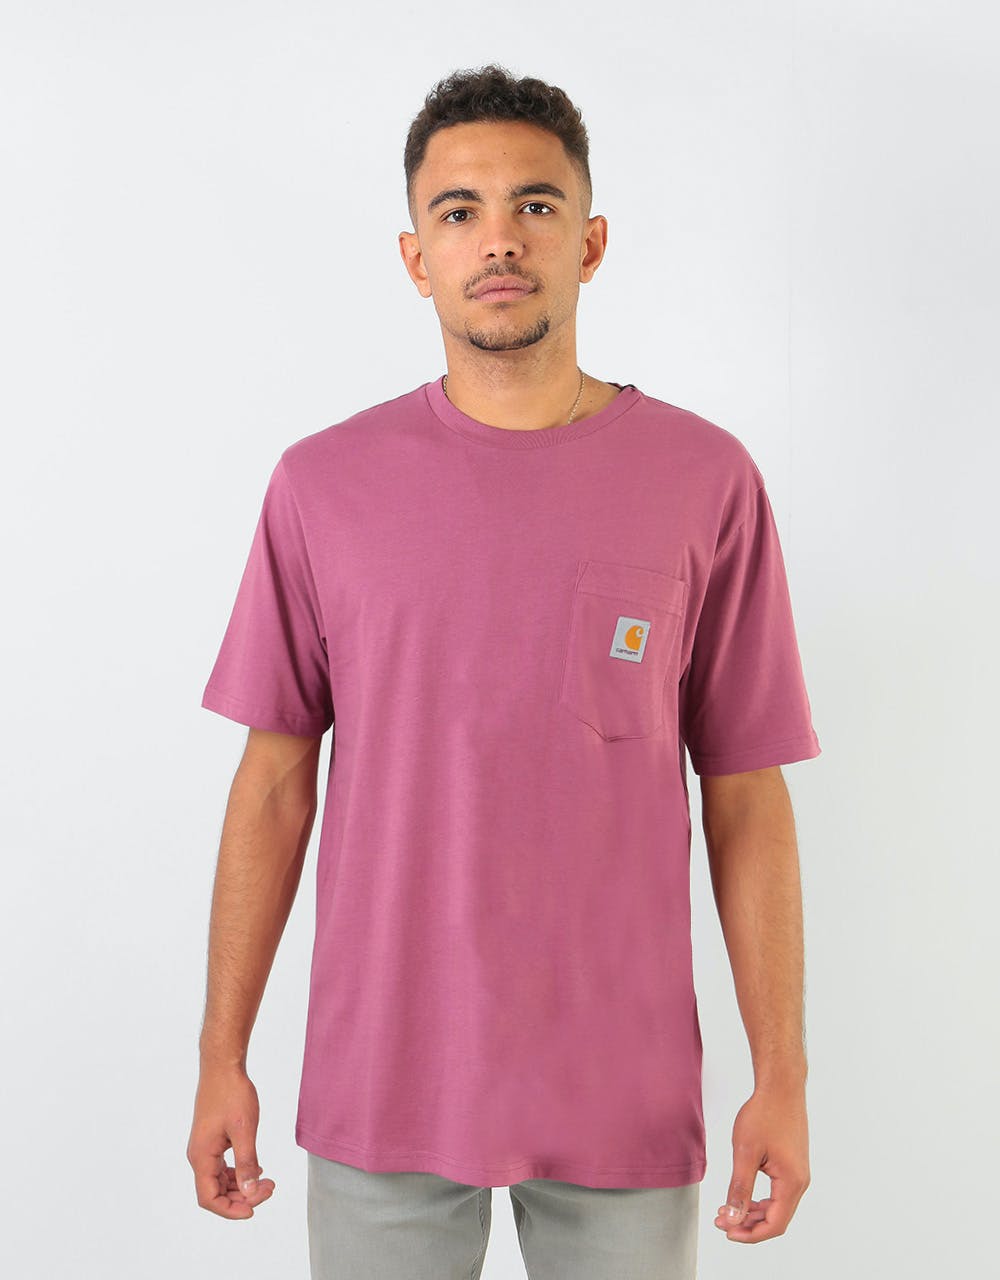 Carhartt WIP S/S Pocket T-Shirt - Dusty Fuschsia